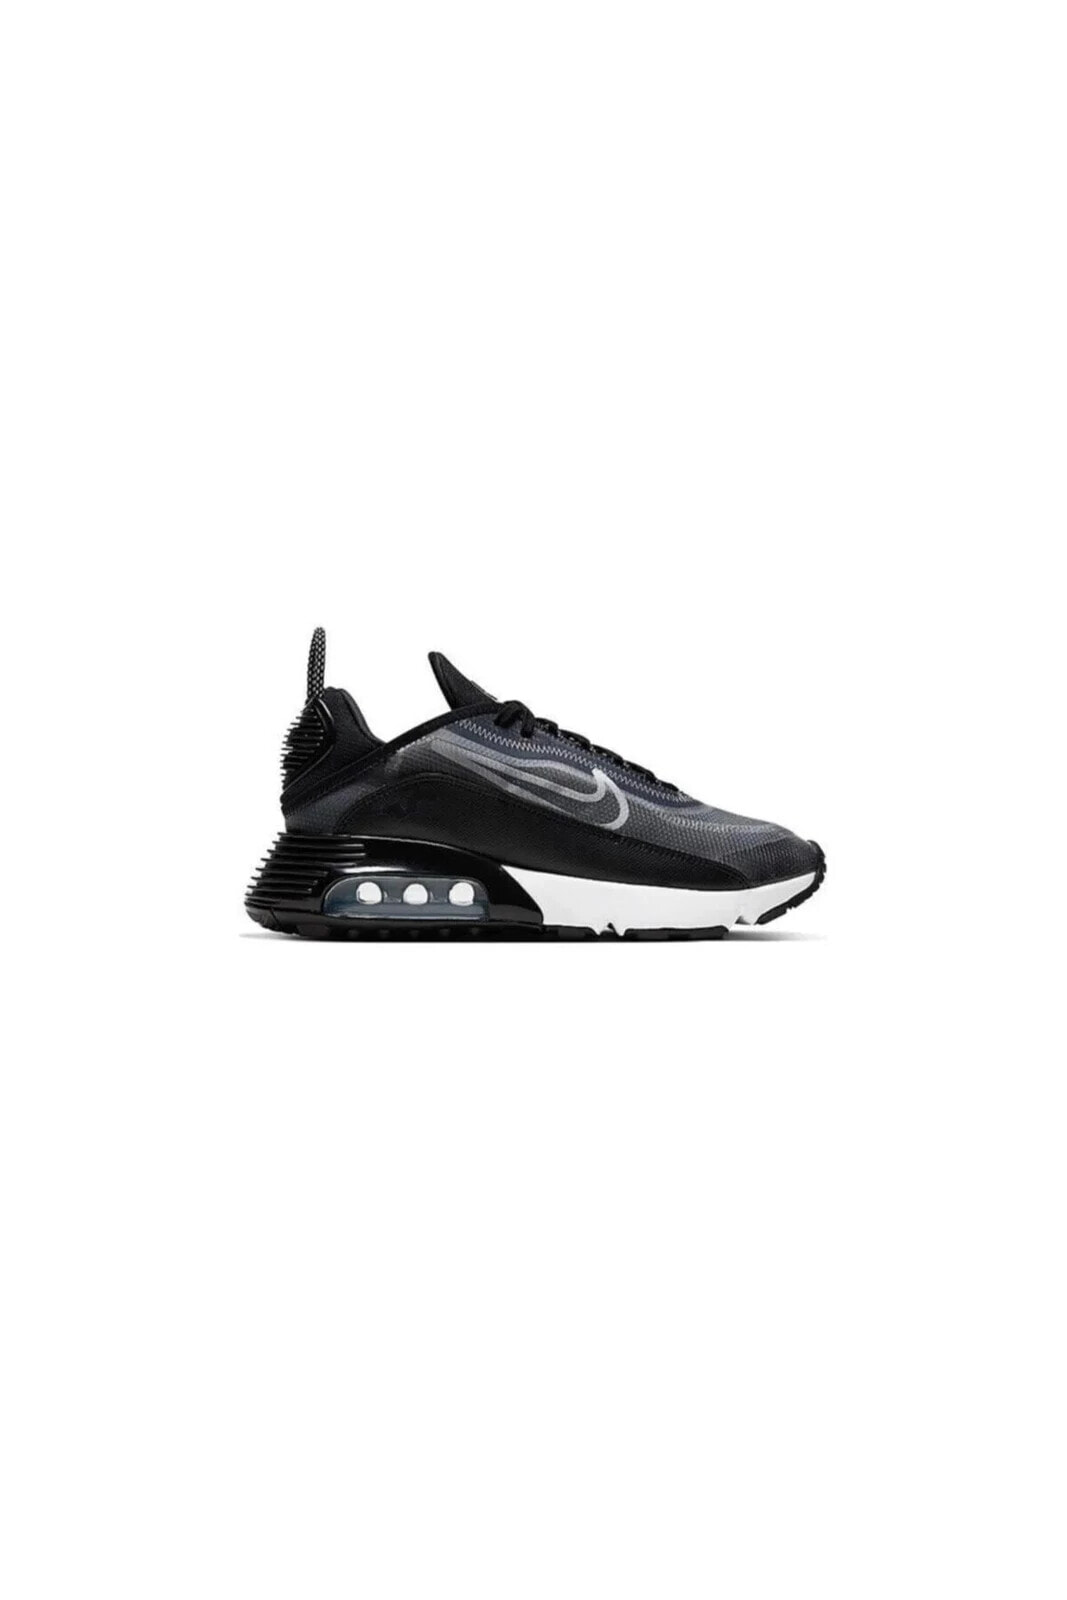 Siyah - Airmax 2090 Spor Ayakkabısı